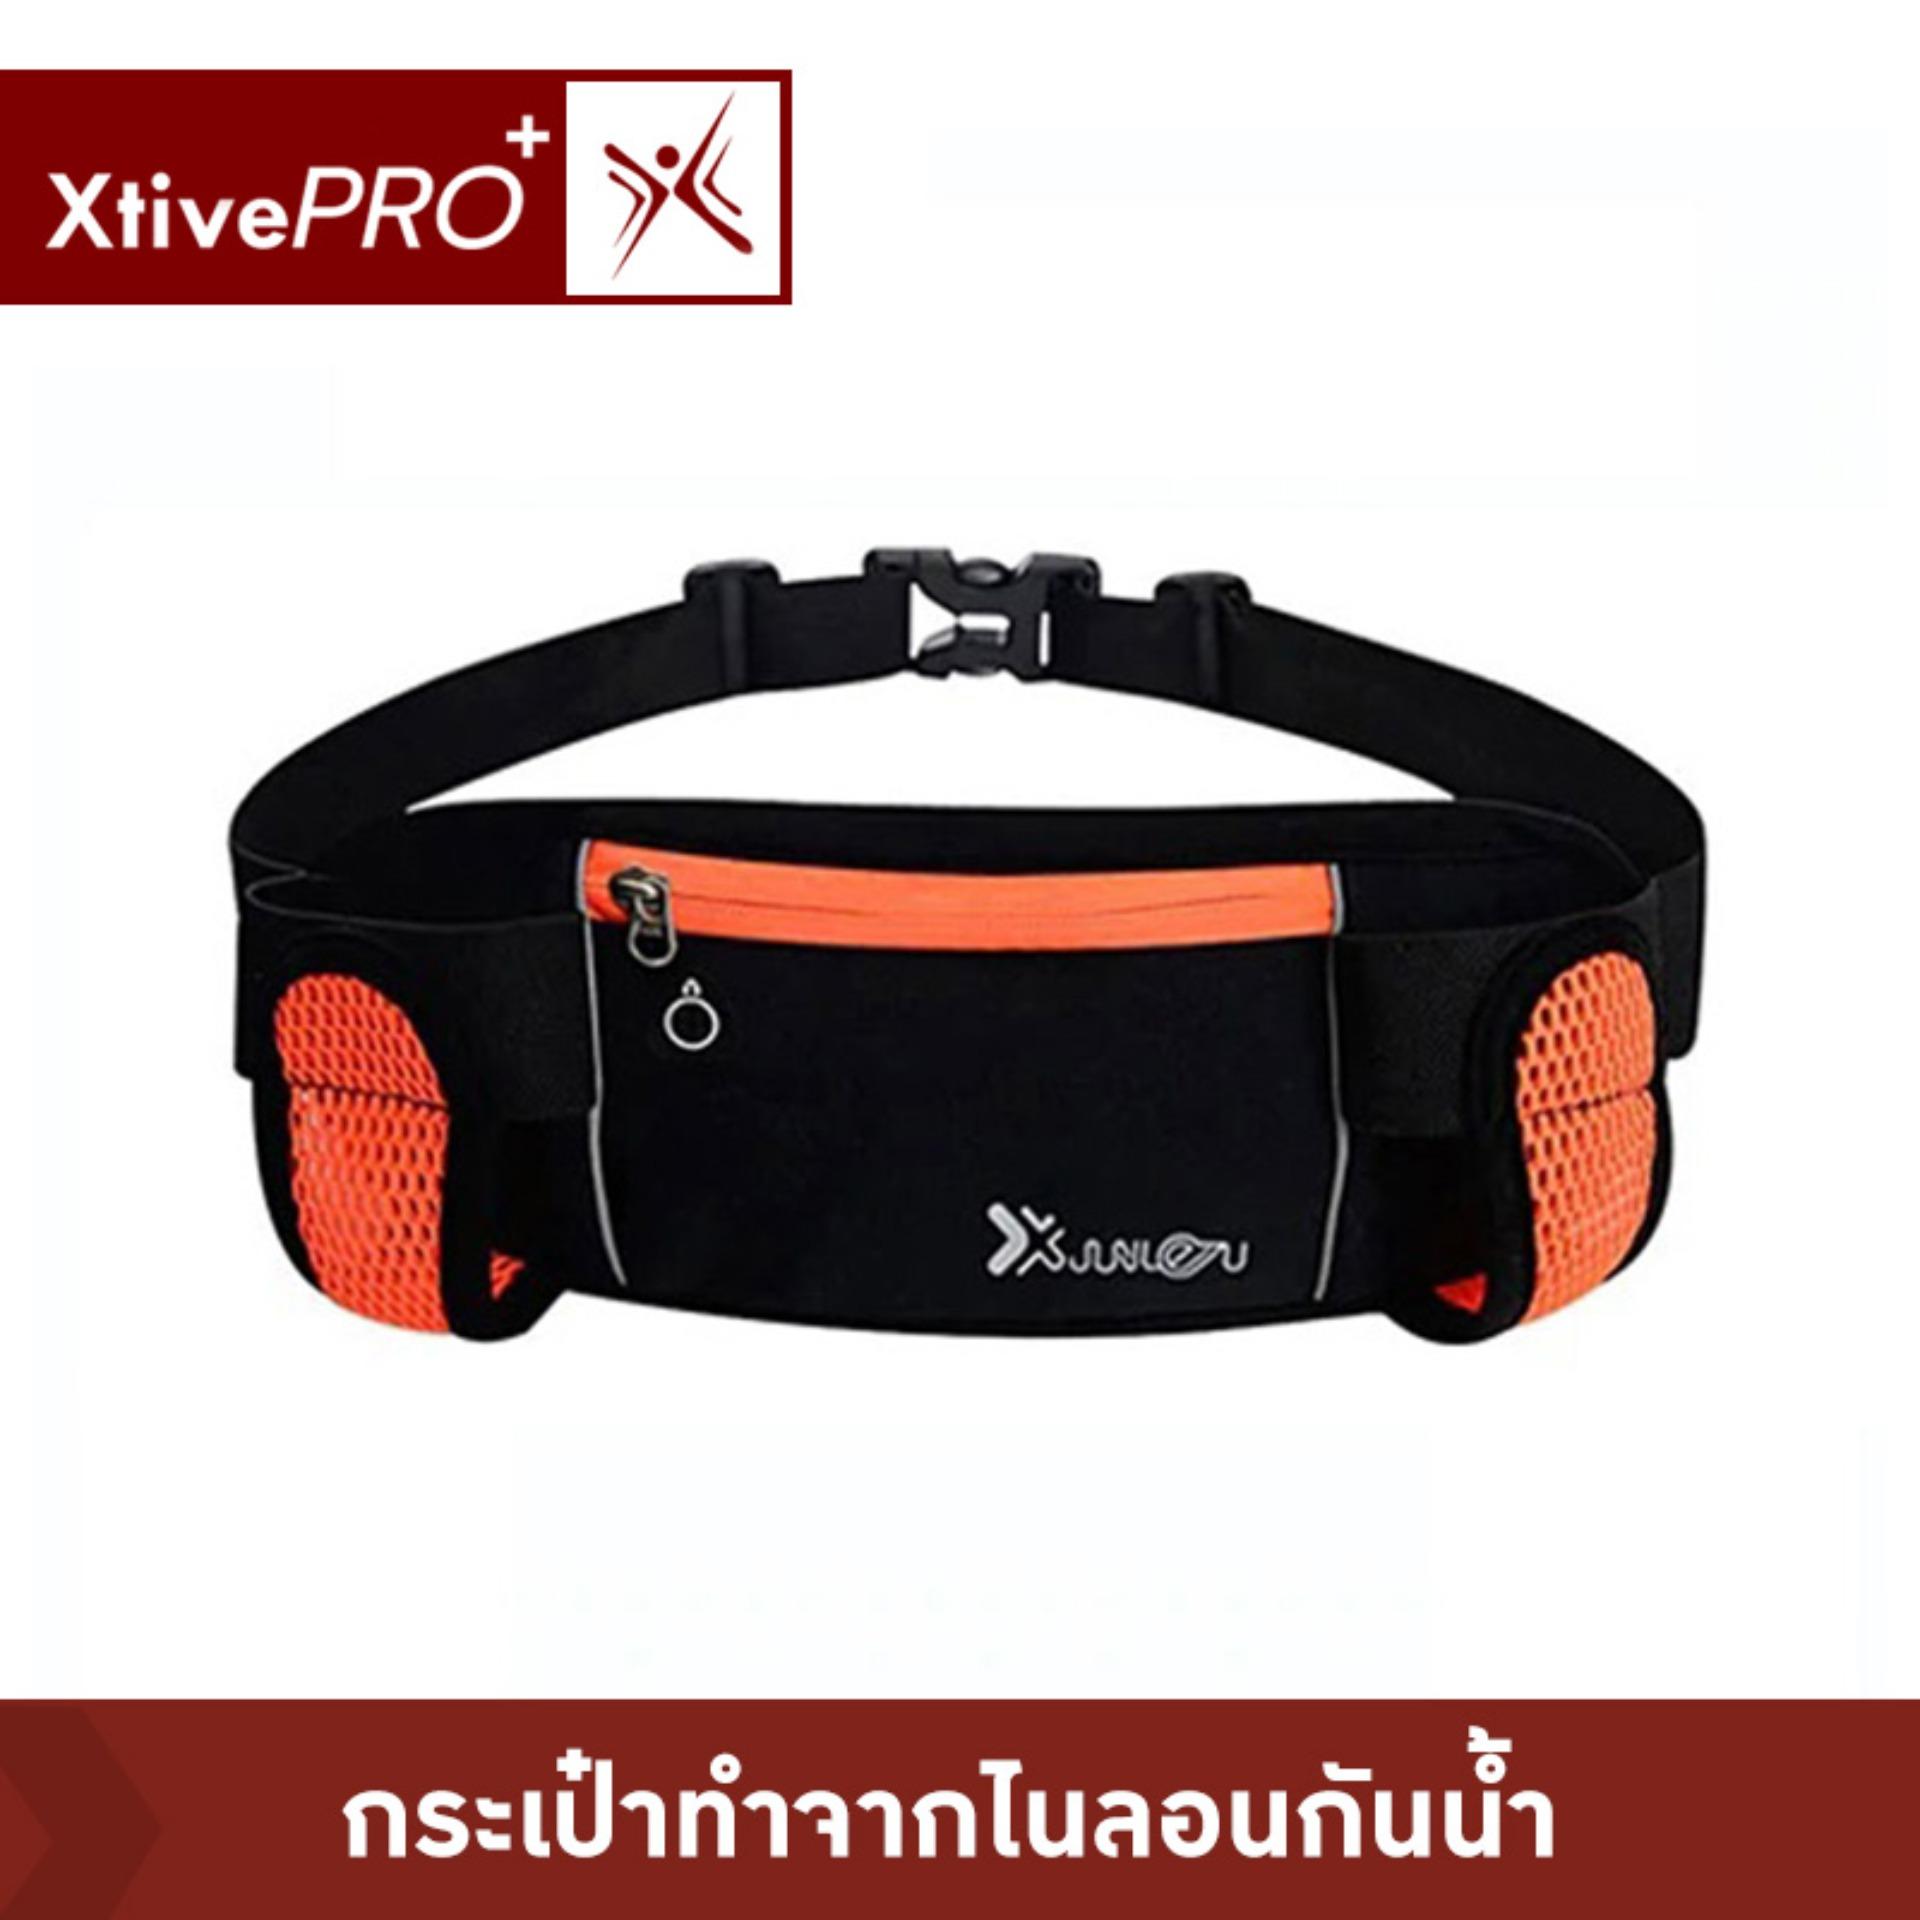 XtivePro Sport Running Belt กระเป๋ากีฬาแบบคาดเอว สีส้ม กระเป๋าคาดเอว กระเป๋าวิ่ง กระเป๋าออกกำลังกาย กระเป๋ากีฬา กันน้ำ Running Belt Running pocket